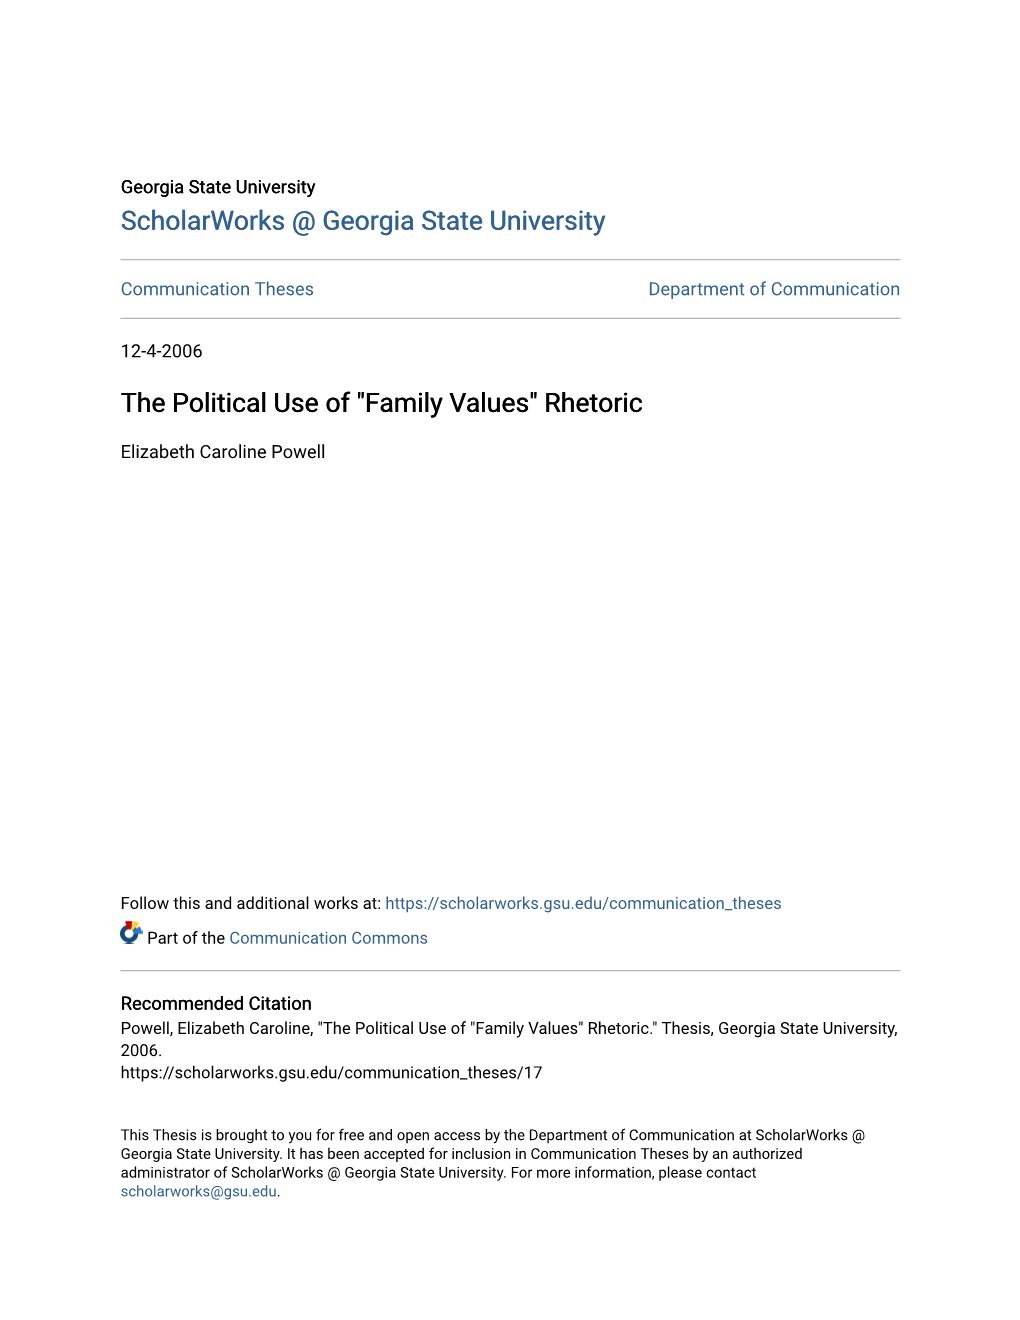 The Political Use of "Family Values" Rhetoric